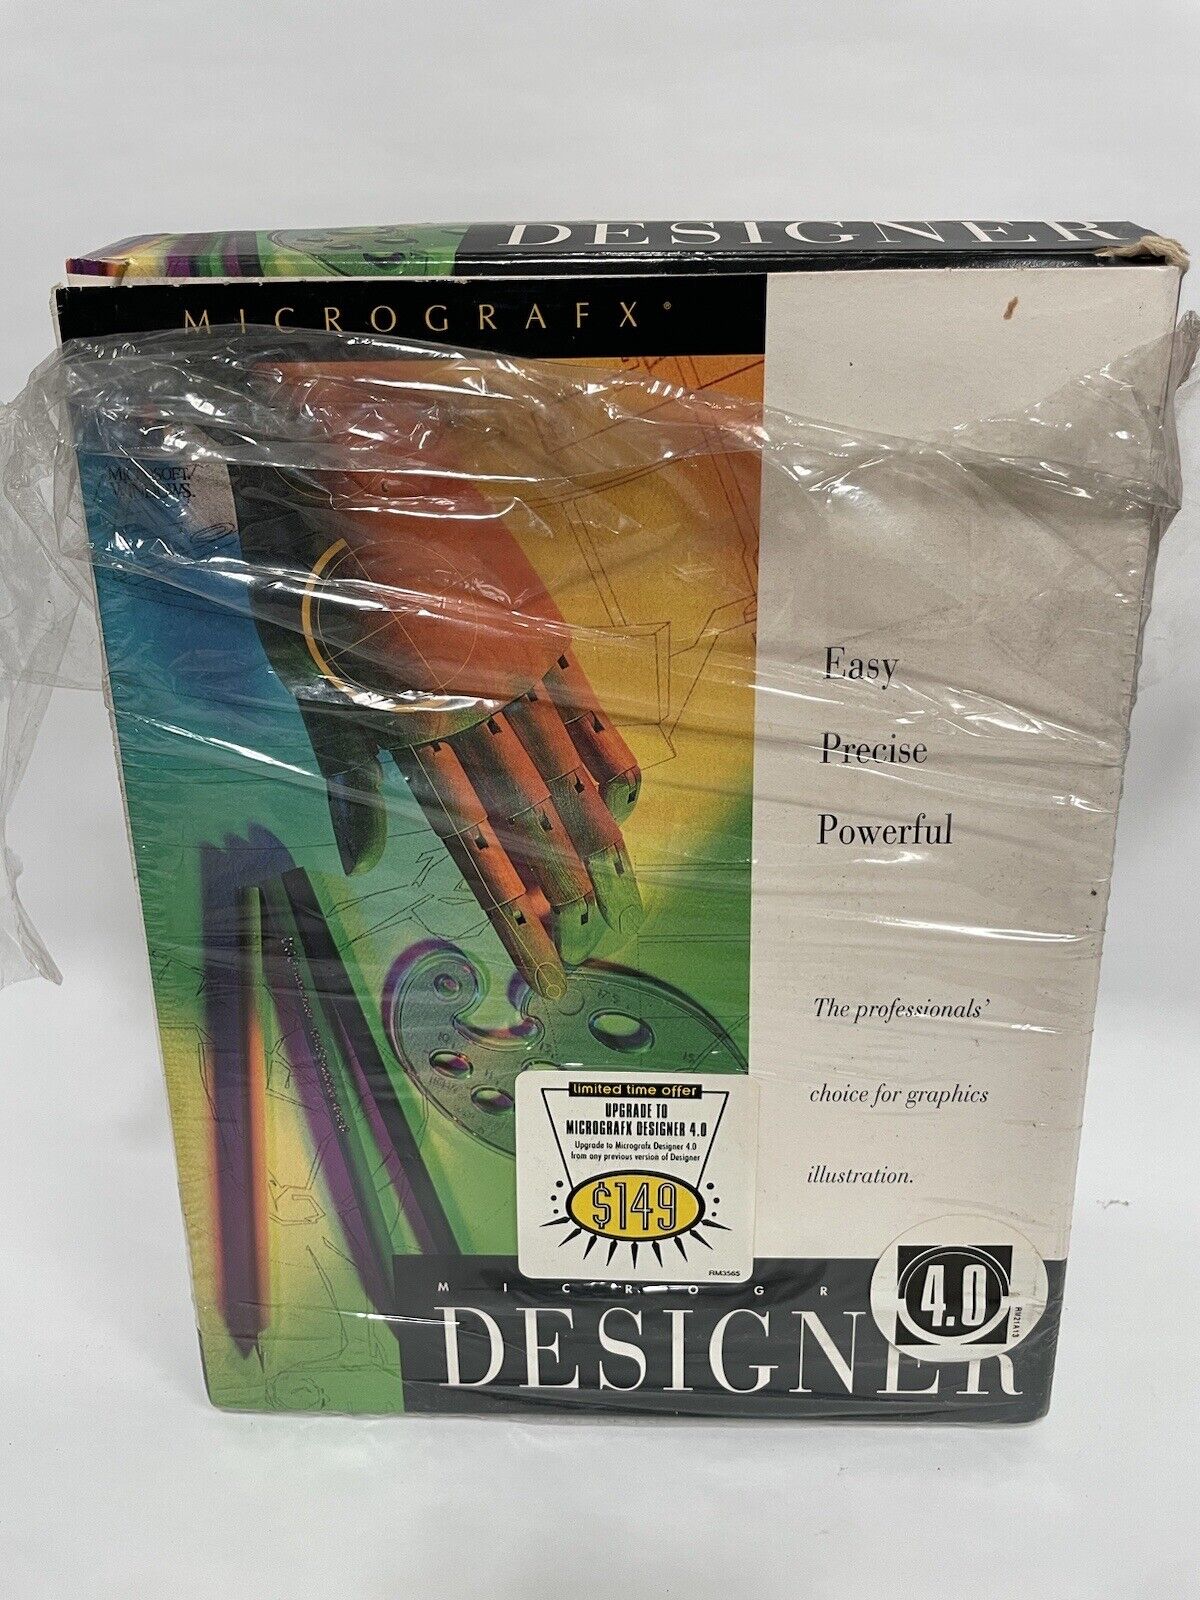 RARE-MICROGRAFX DESIGNER 4.0 Software in Original Box W/CD/ROM - VERY NICE